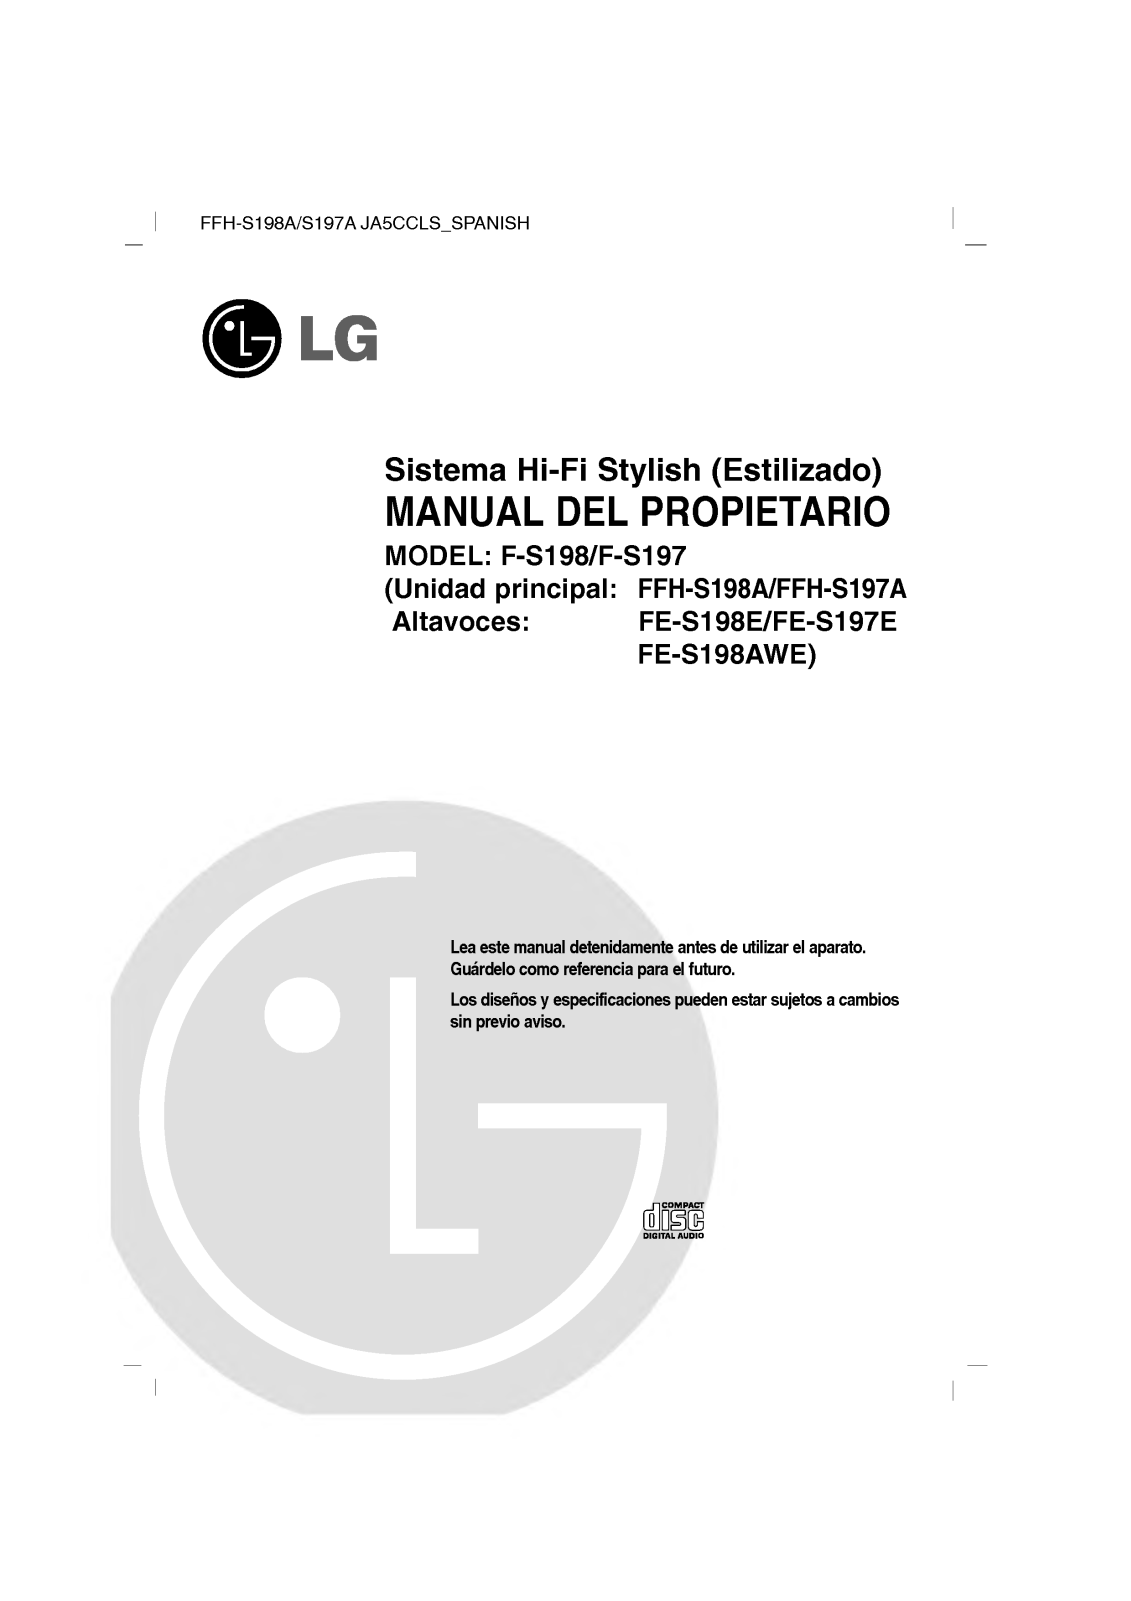 Lg FFH-S197, FFH-S198 User Manual